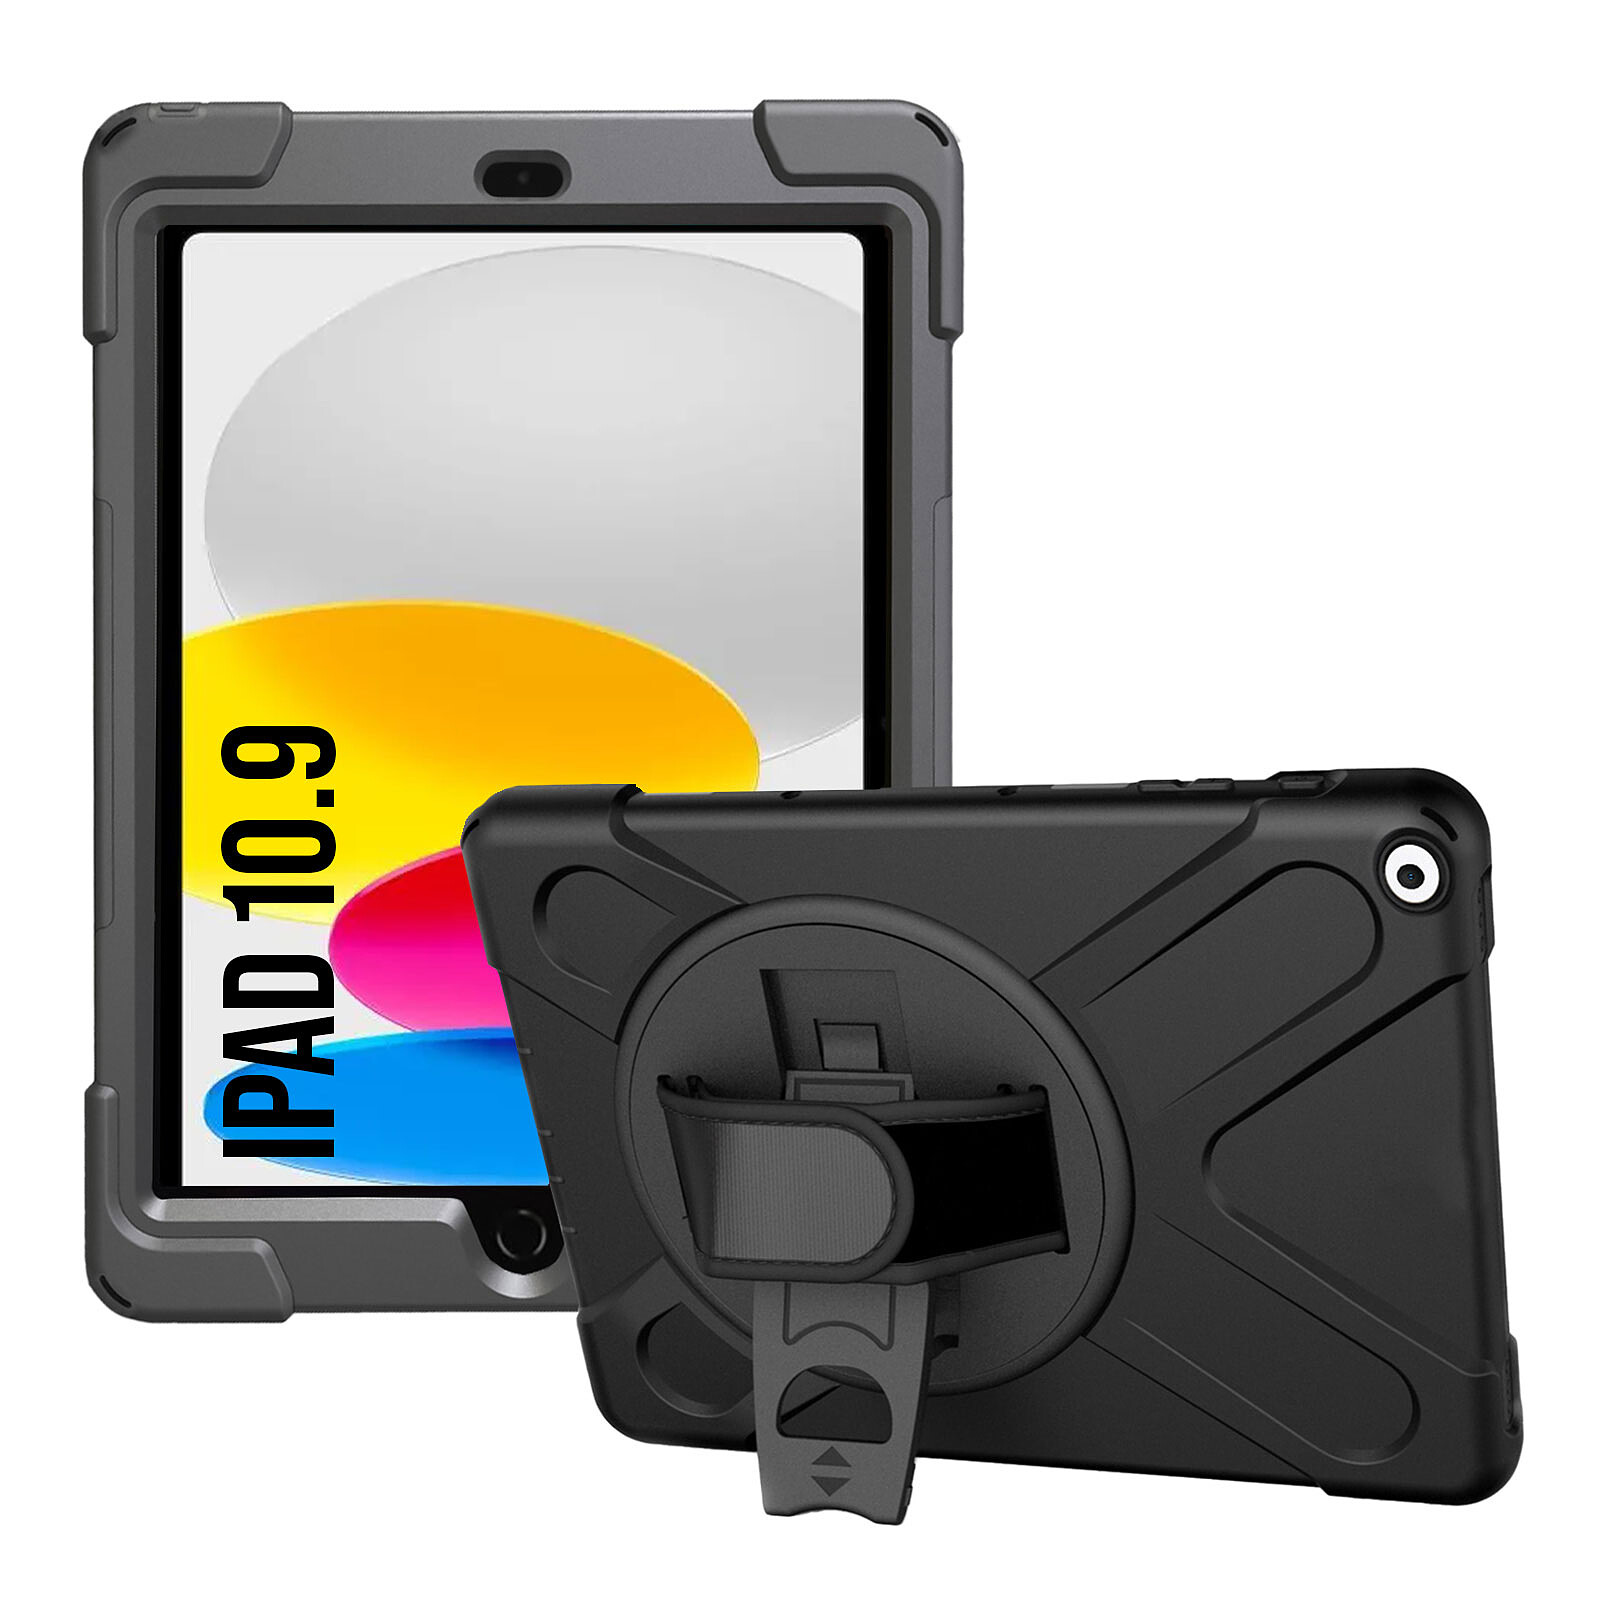 Soporte tablet giratorio universal para iPads, Samsung